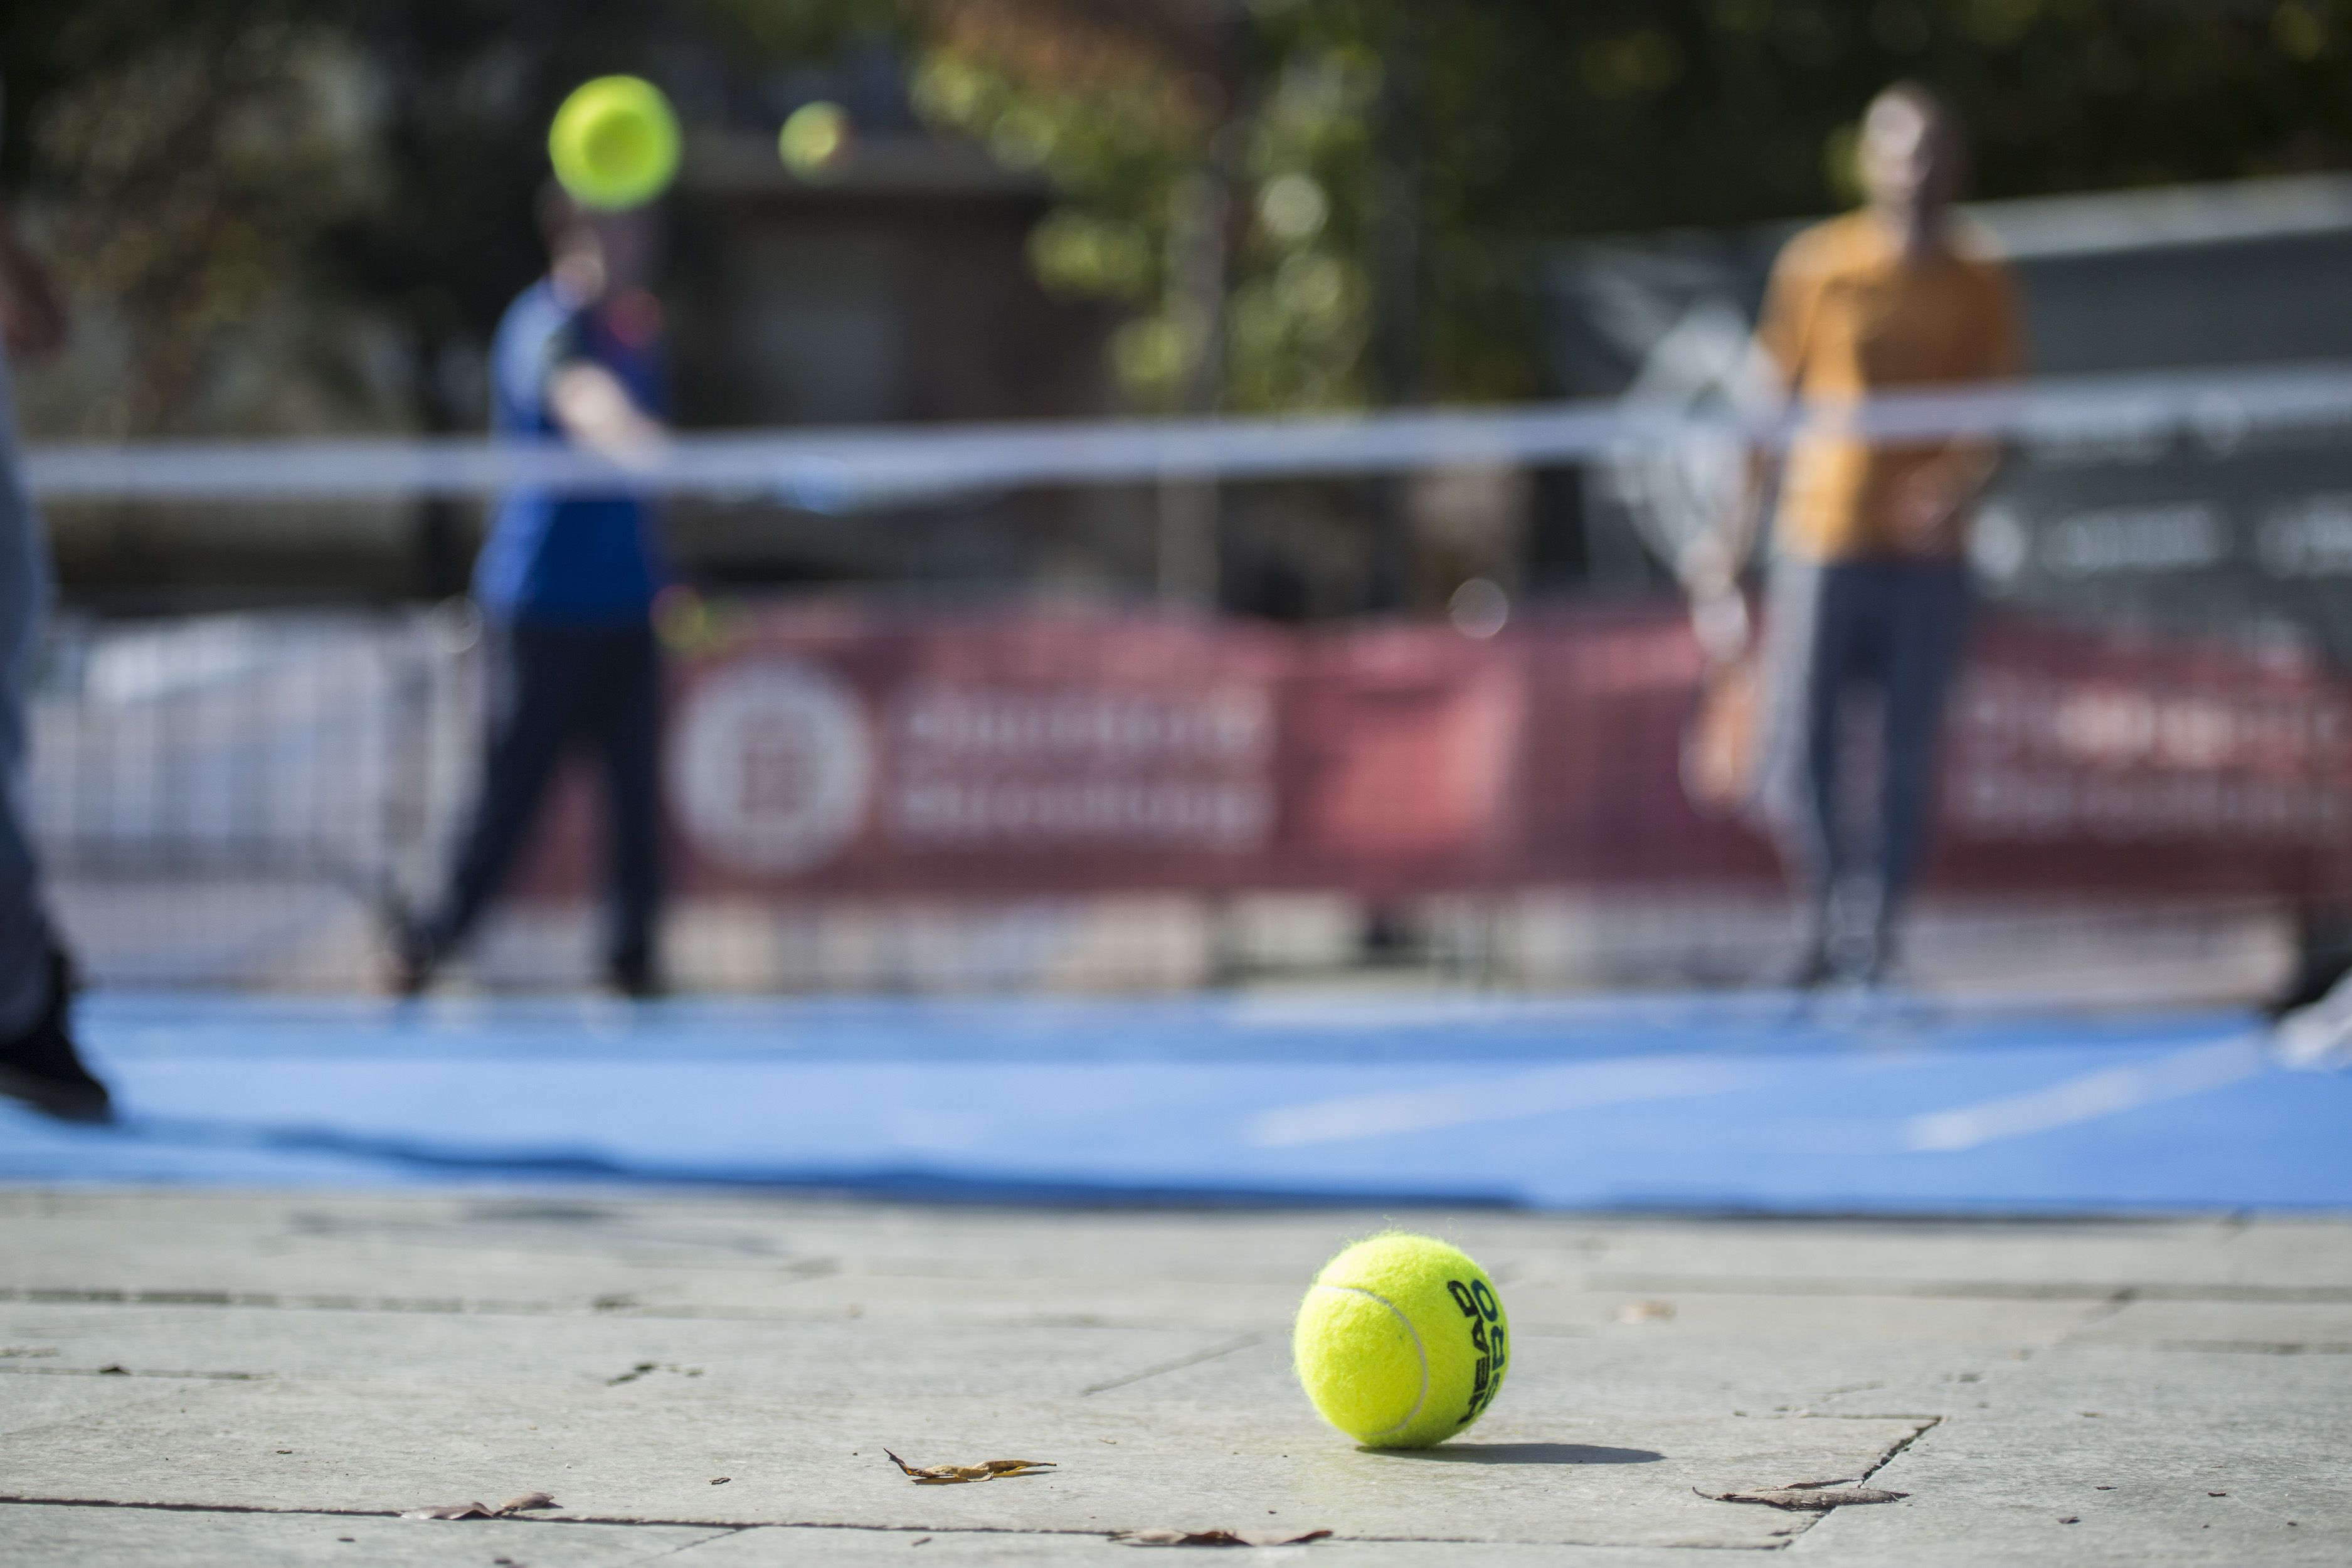 Activitat de tennis al carrer. FOTO: Ángel Bravo